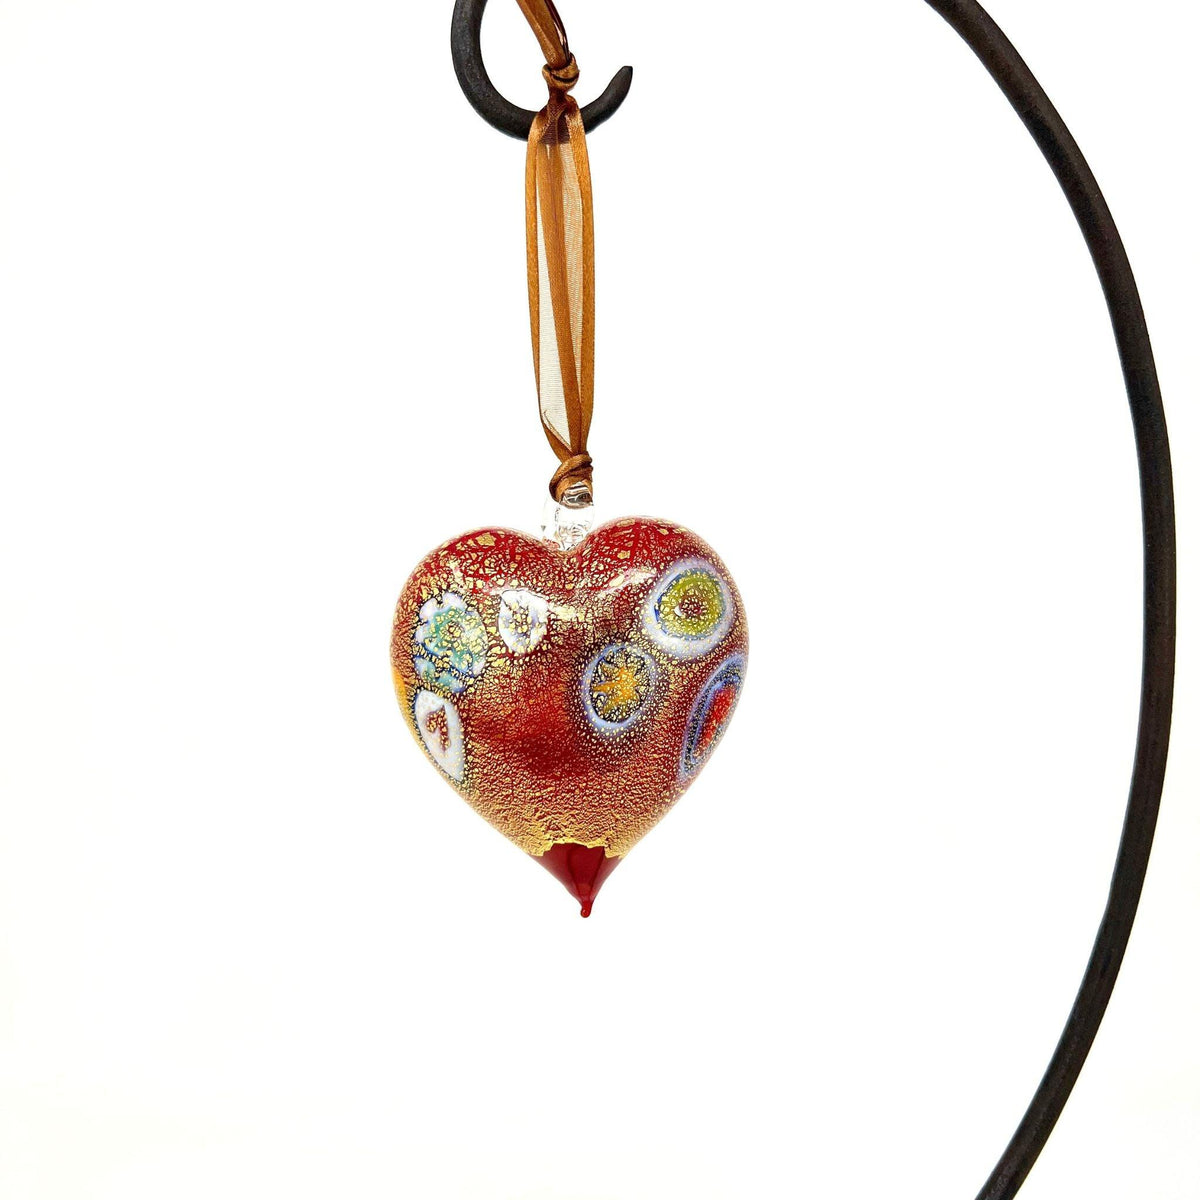 Millefiori Murano Glass Blown Heart Hanging Ornament, Large, Red, 24 karat gold foil finish at MyItalianDecor